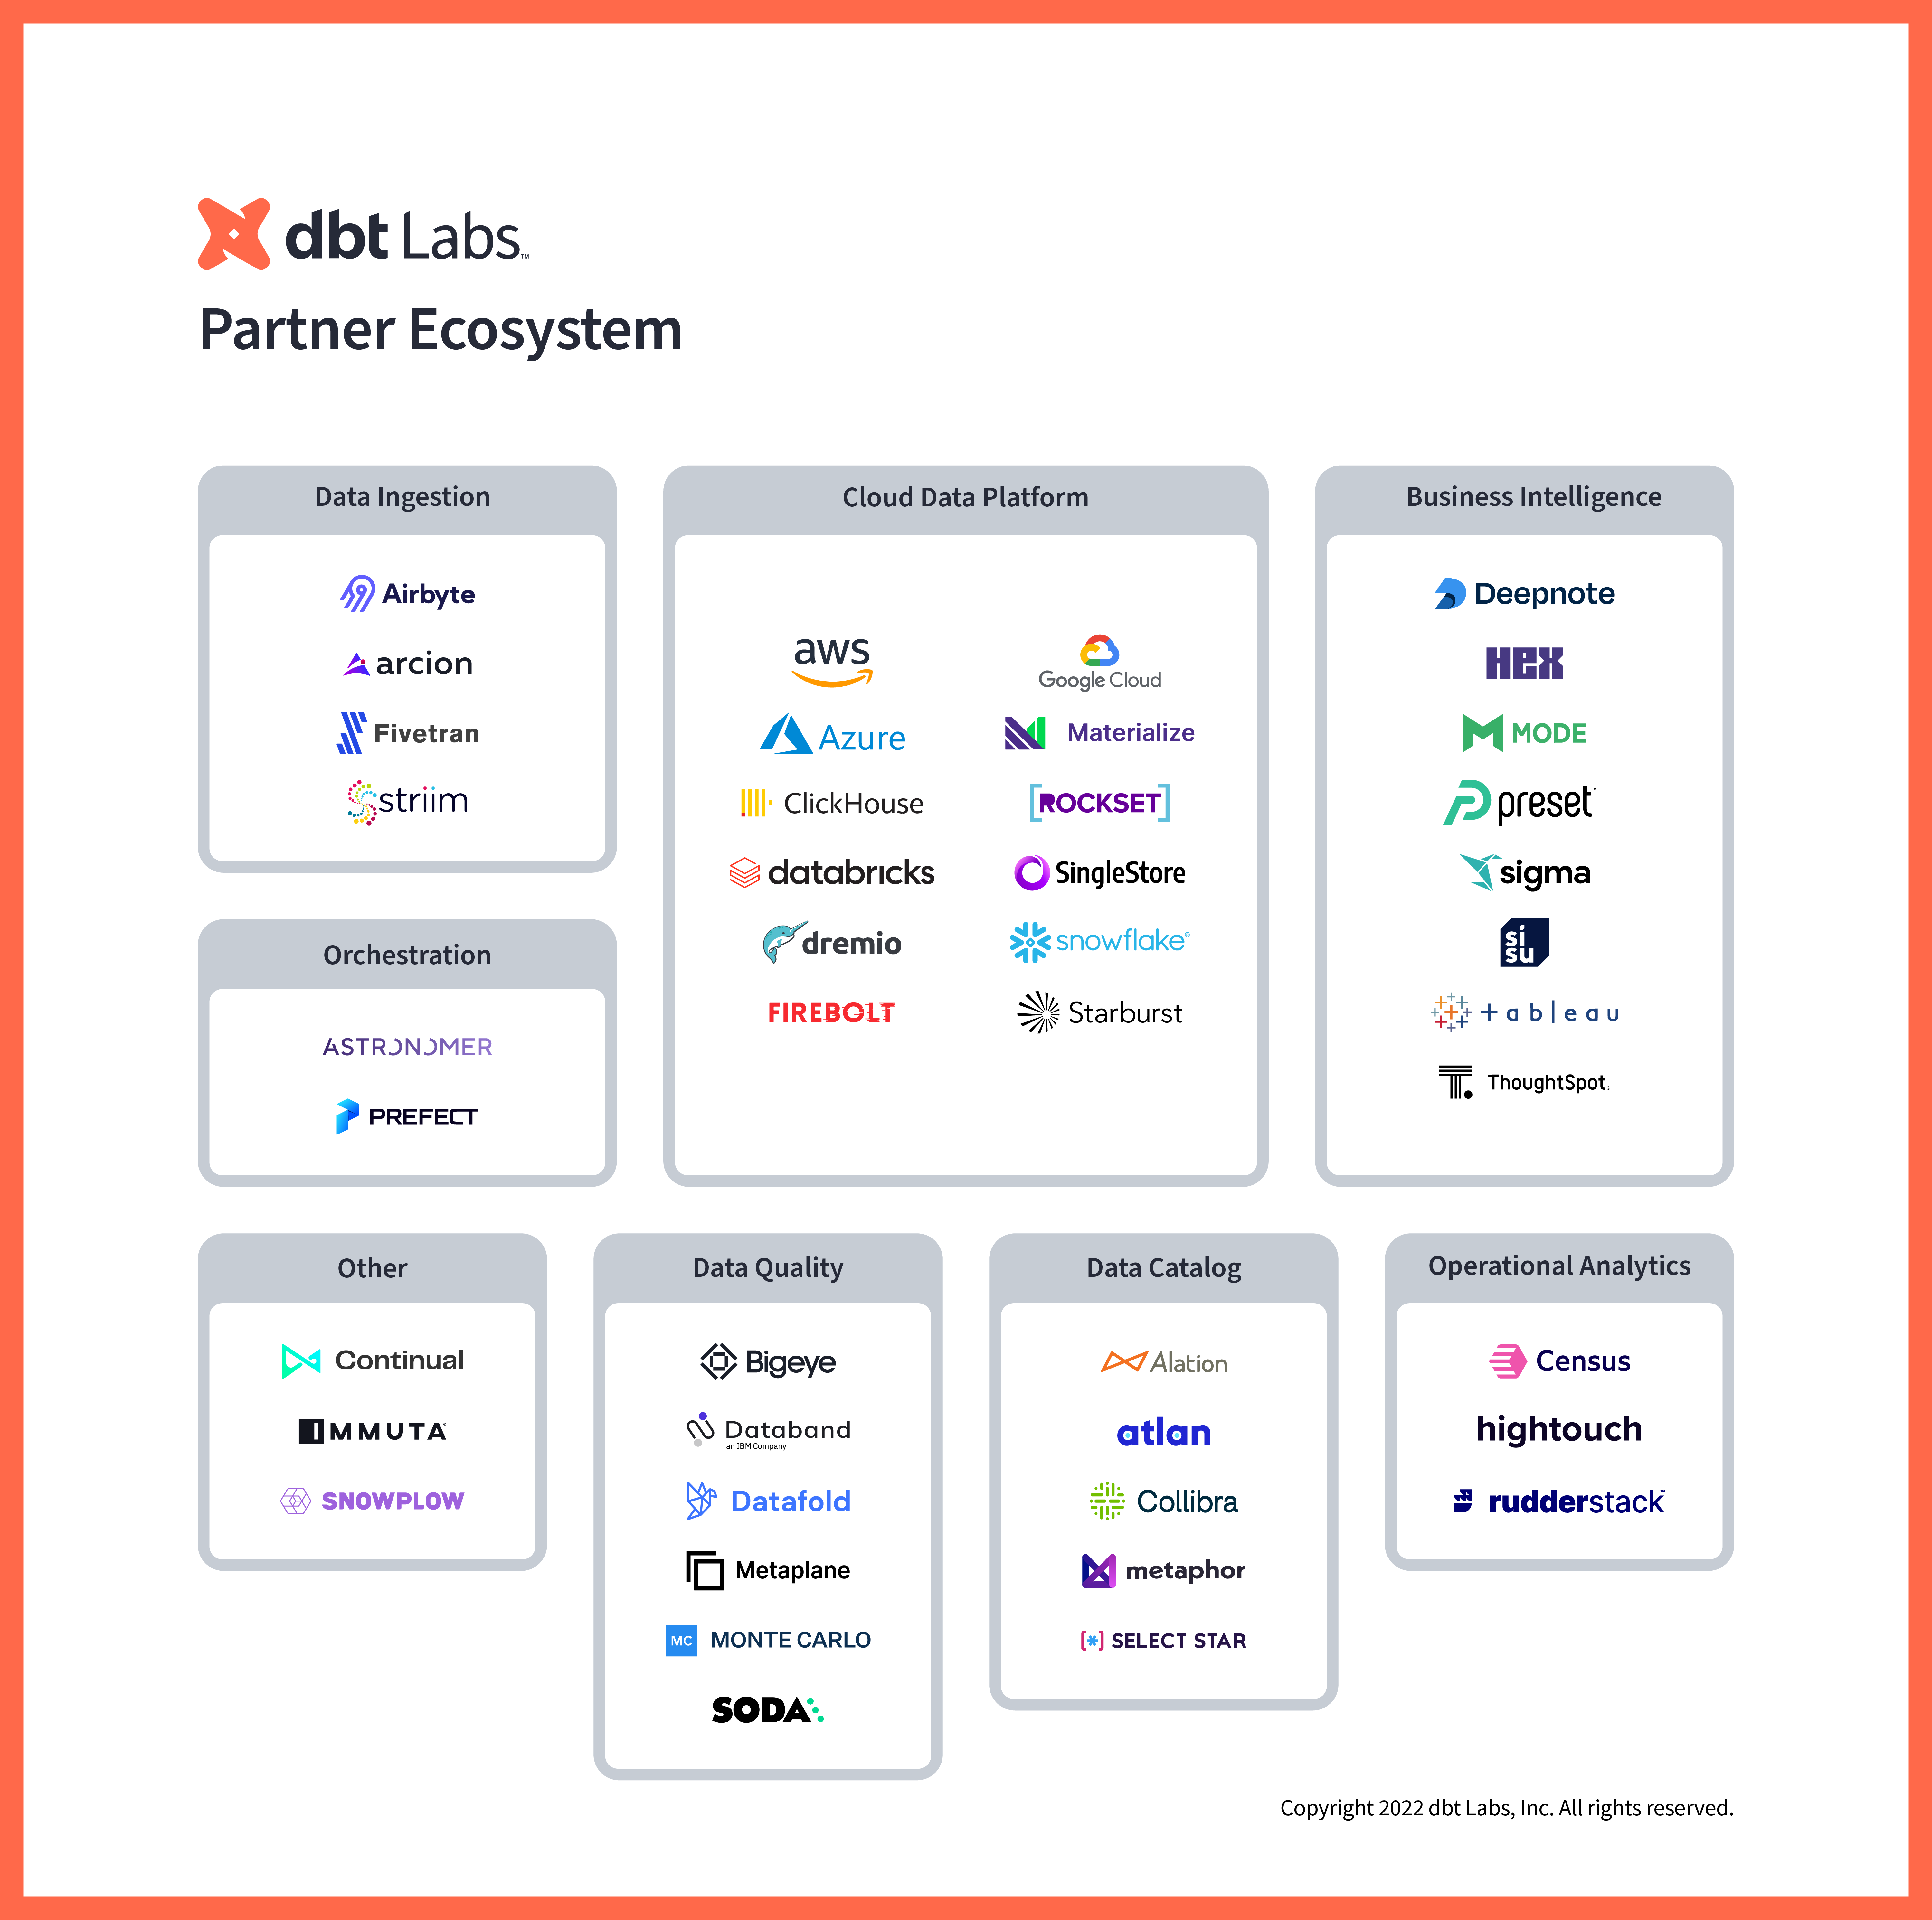 The dbt Labs Partner Ecosystem